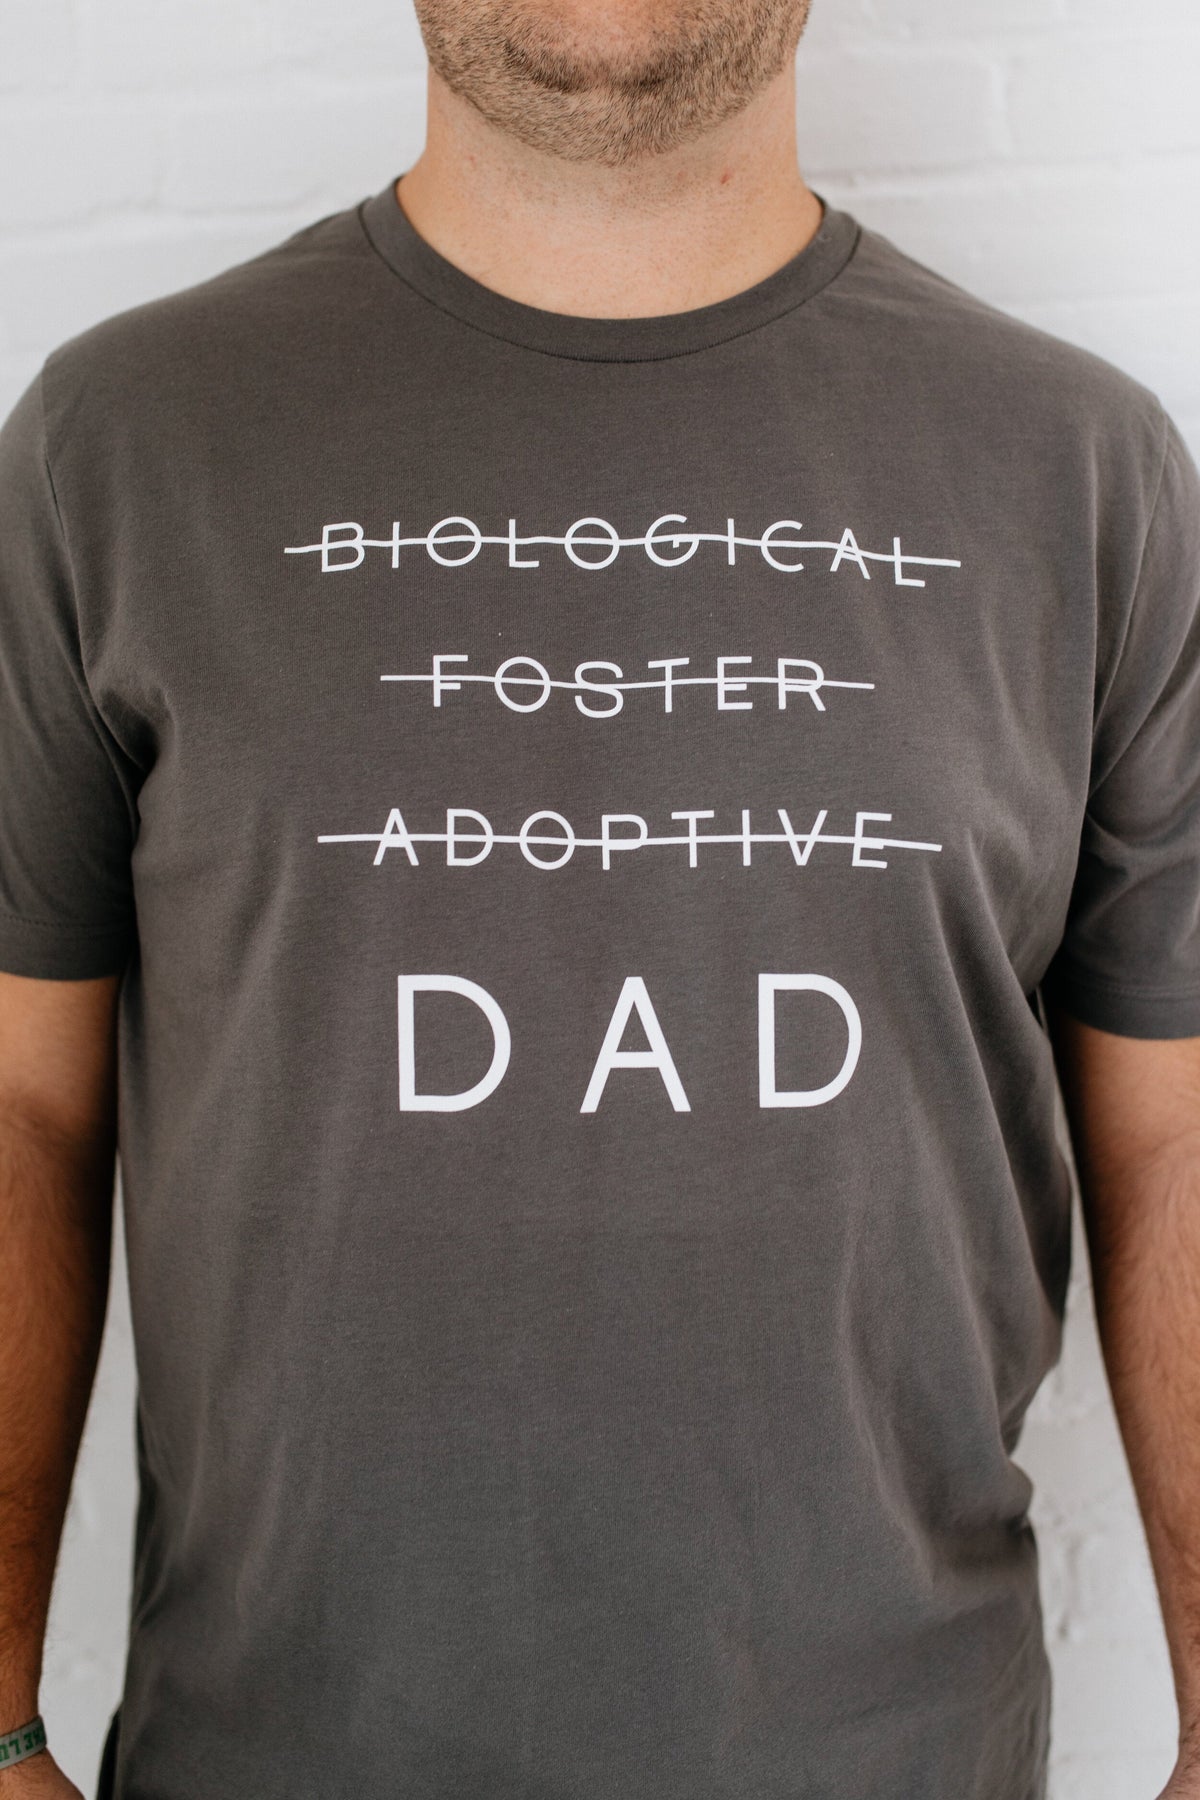 BIOLOGICAL ADOPTIVE FOSTER DAD T-SHIRT